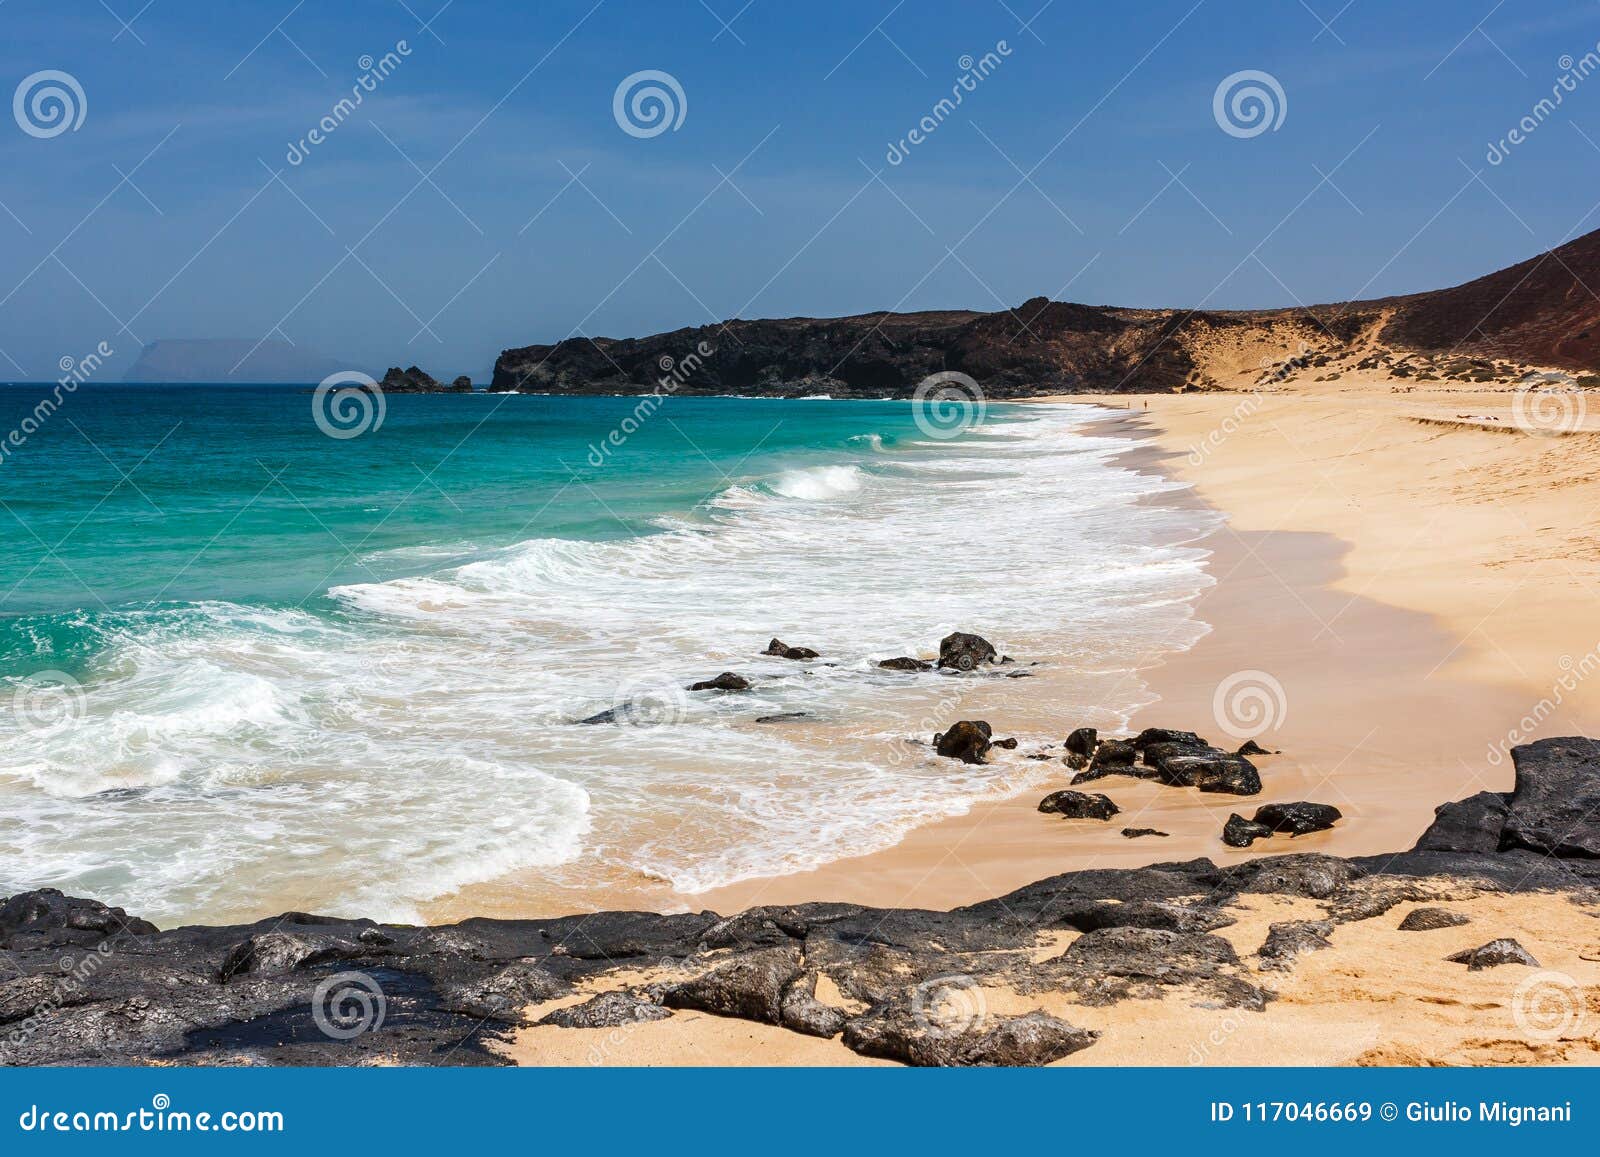 panorama of playa de las conchas beach with blue ocean and white sand. la graciosa, lanzarote, canary islands, spain.